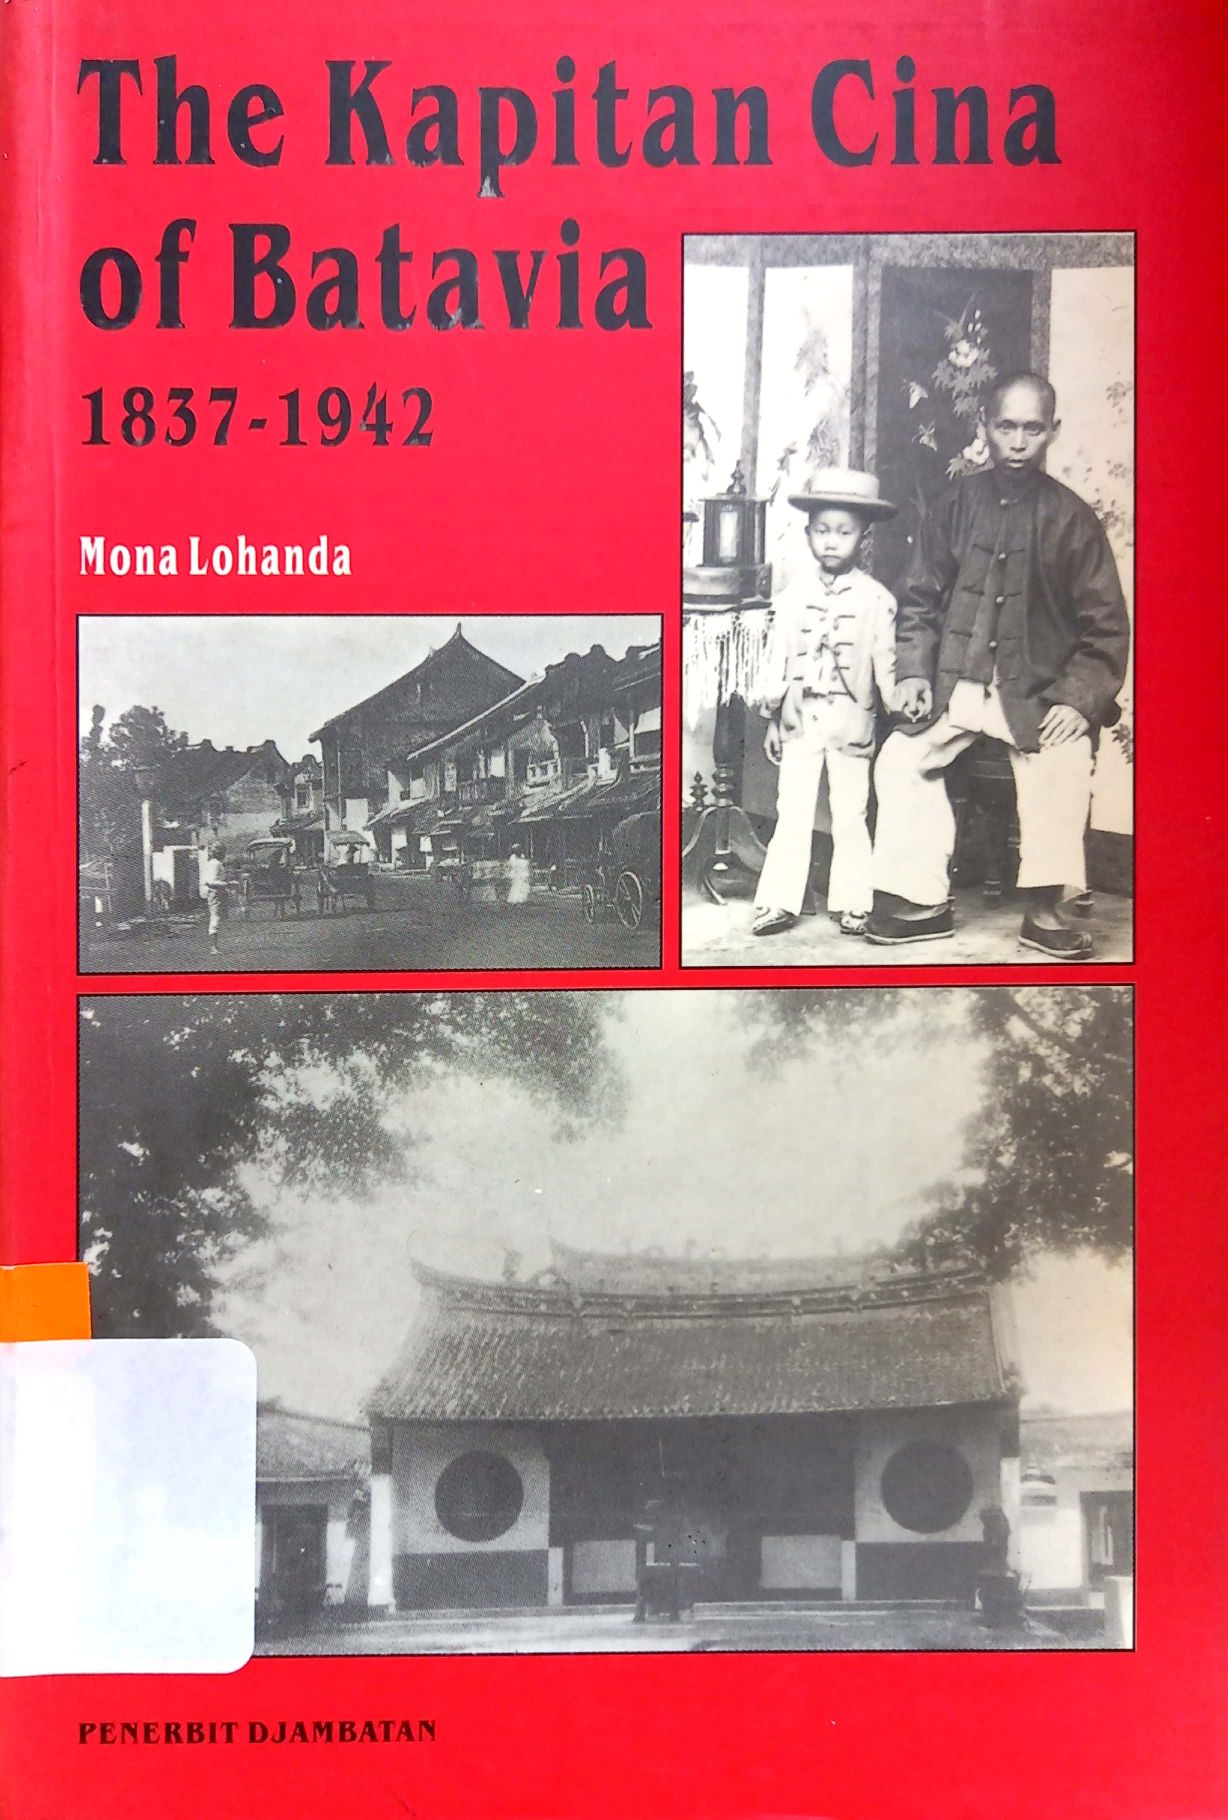 The Kapitan Cina of Batavia 1837-1942